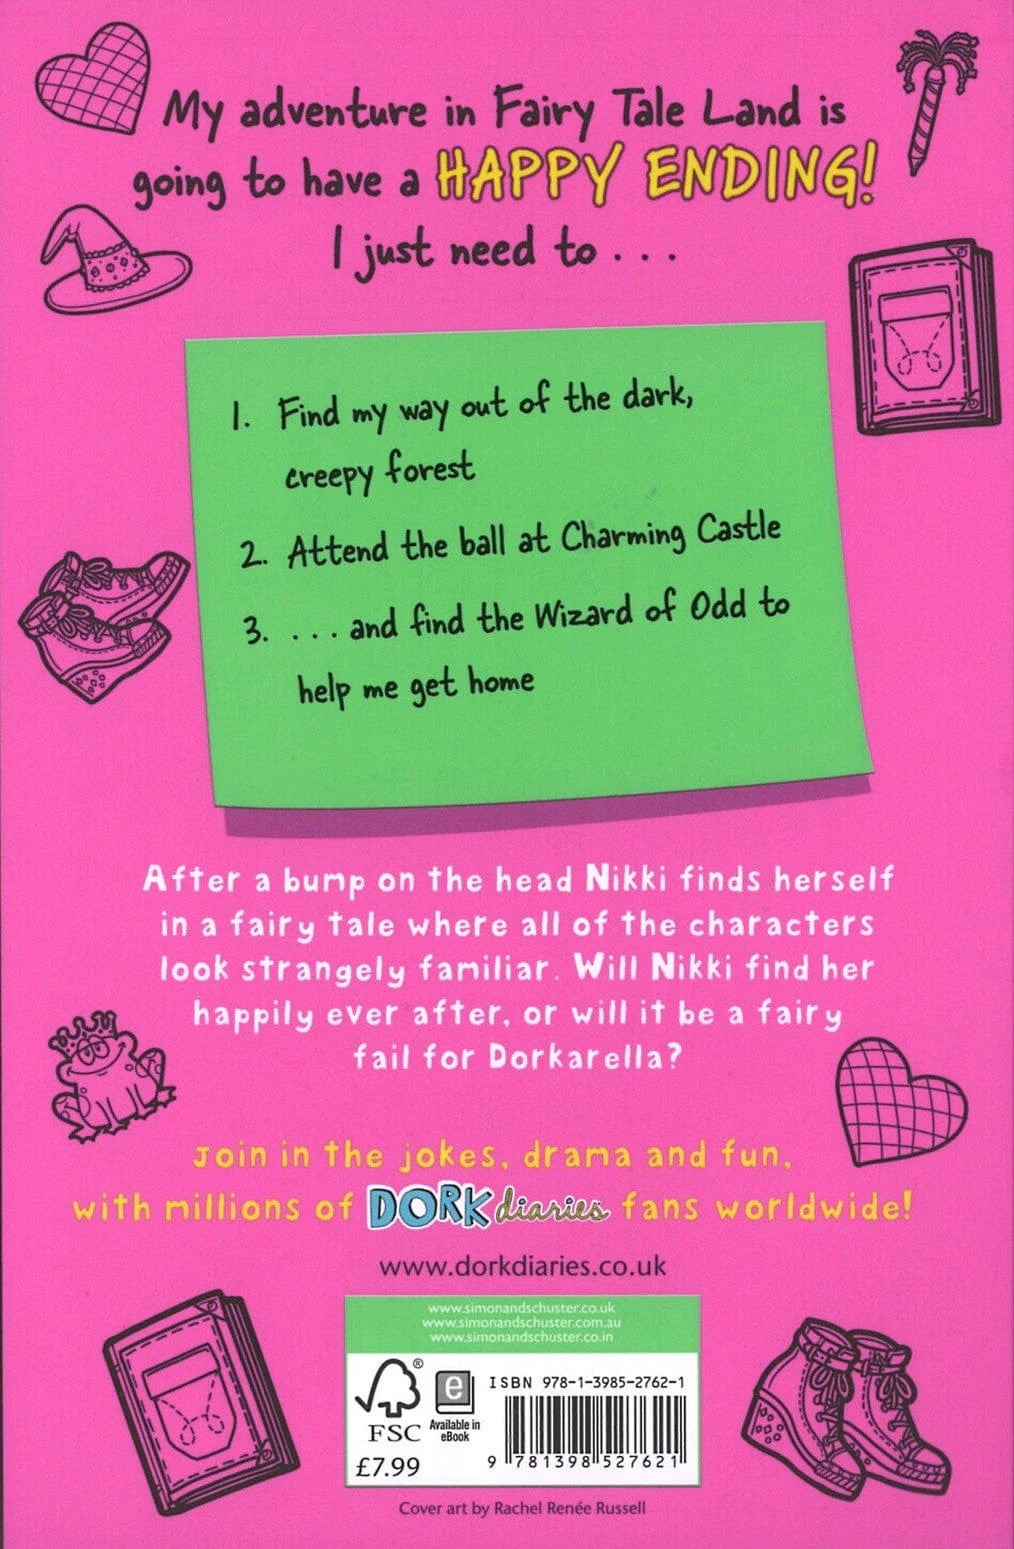 Dork Diaries: Once Upon A Dork